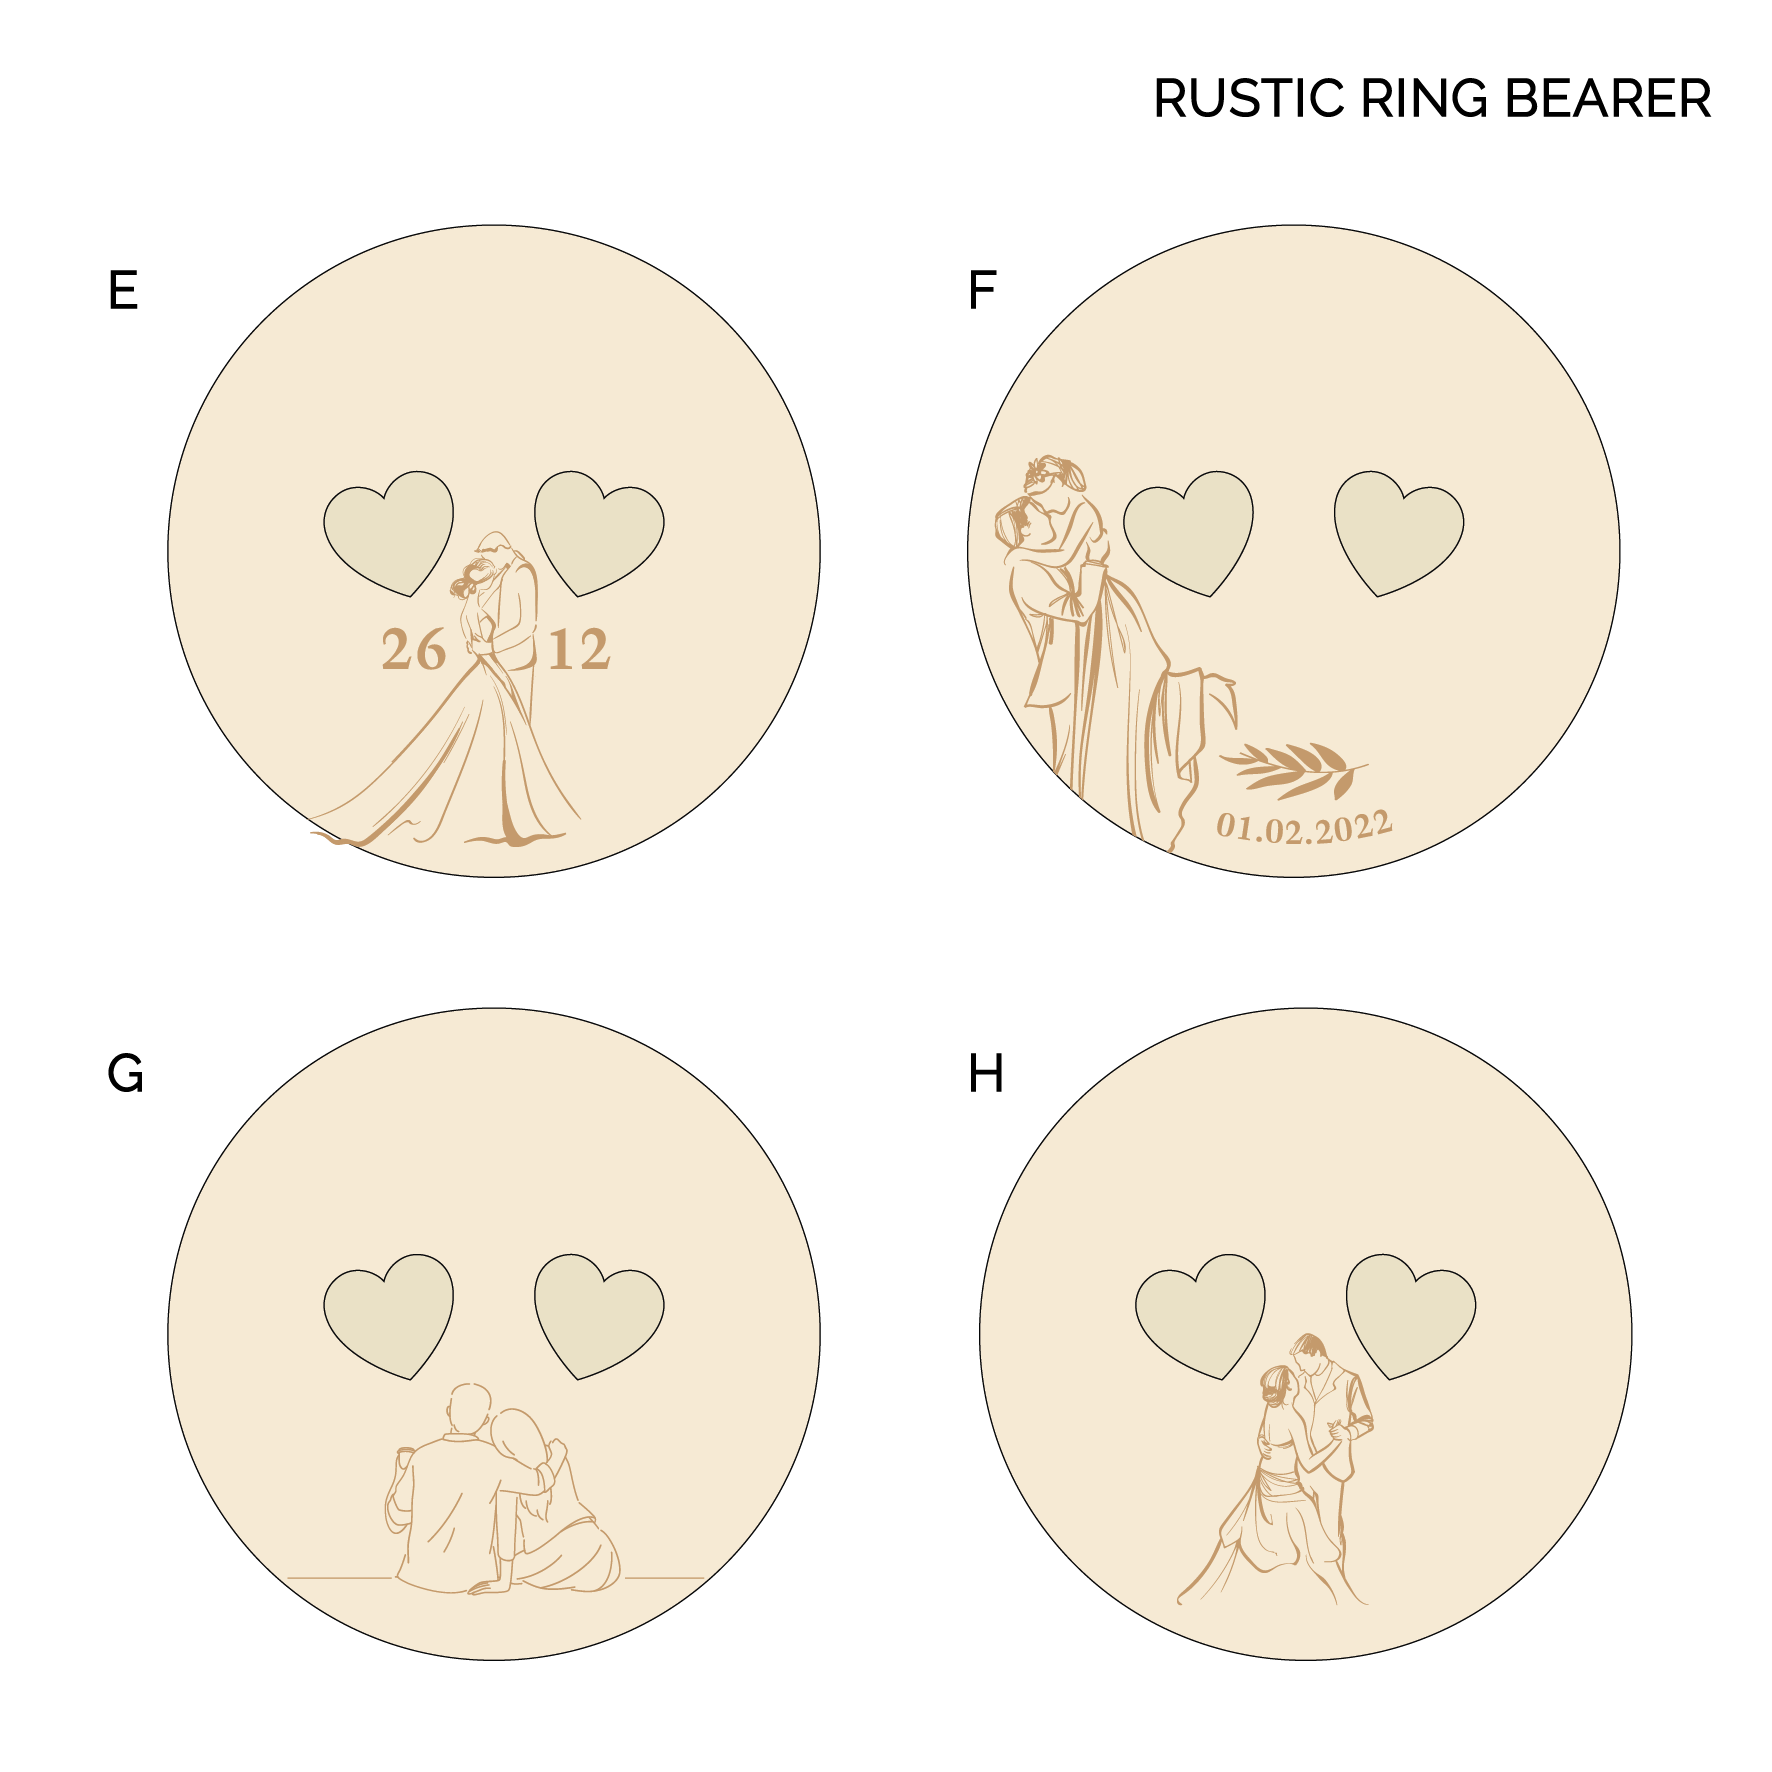 Rustic Ring Bearer - Clik Clok